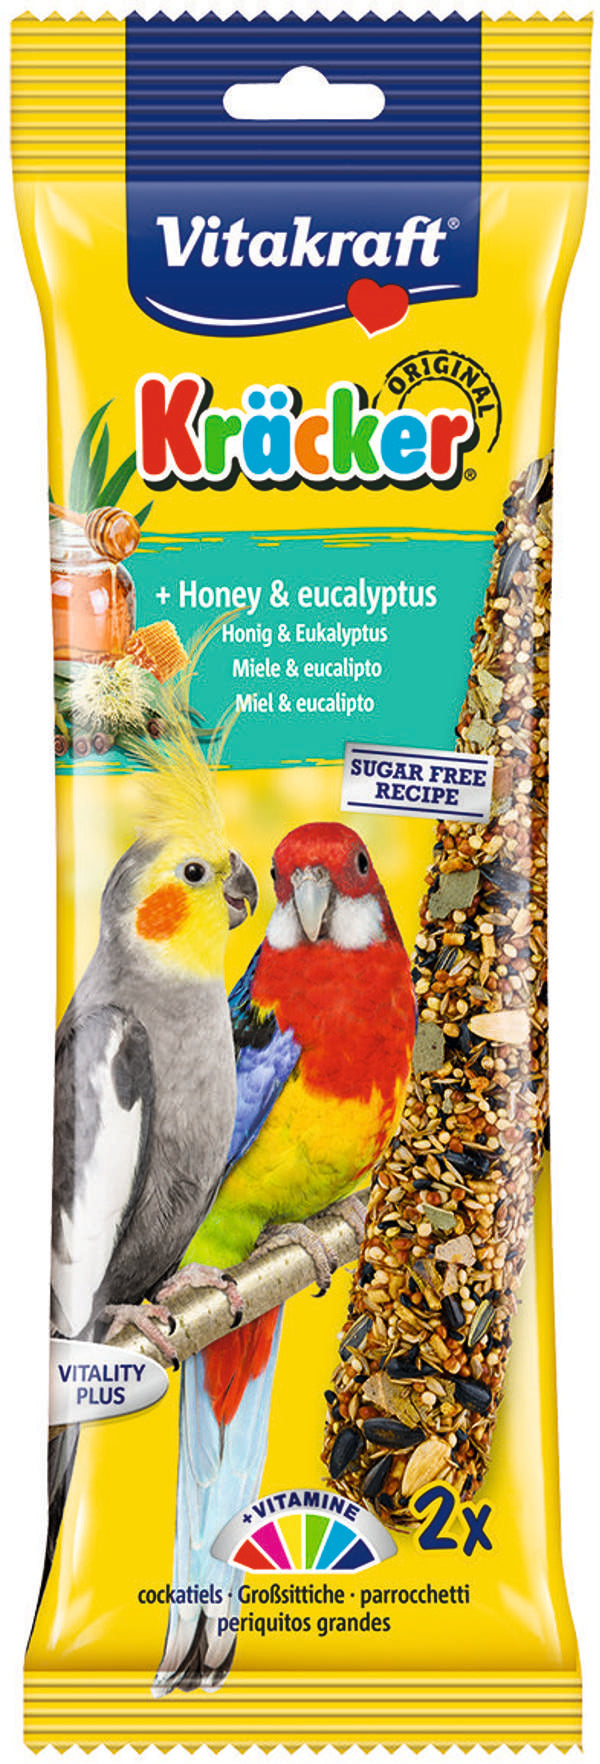 Vitakraft Australian Cockatiel Honey & Eukalyptus Kracker 180g - Case of 5